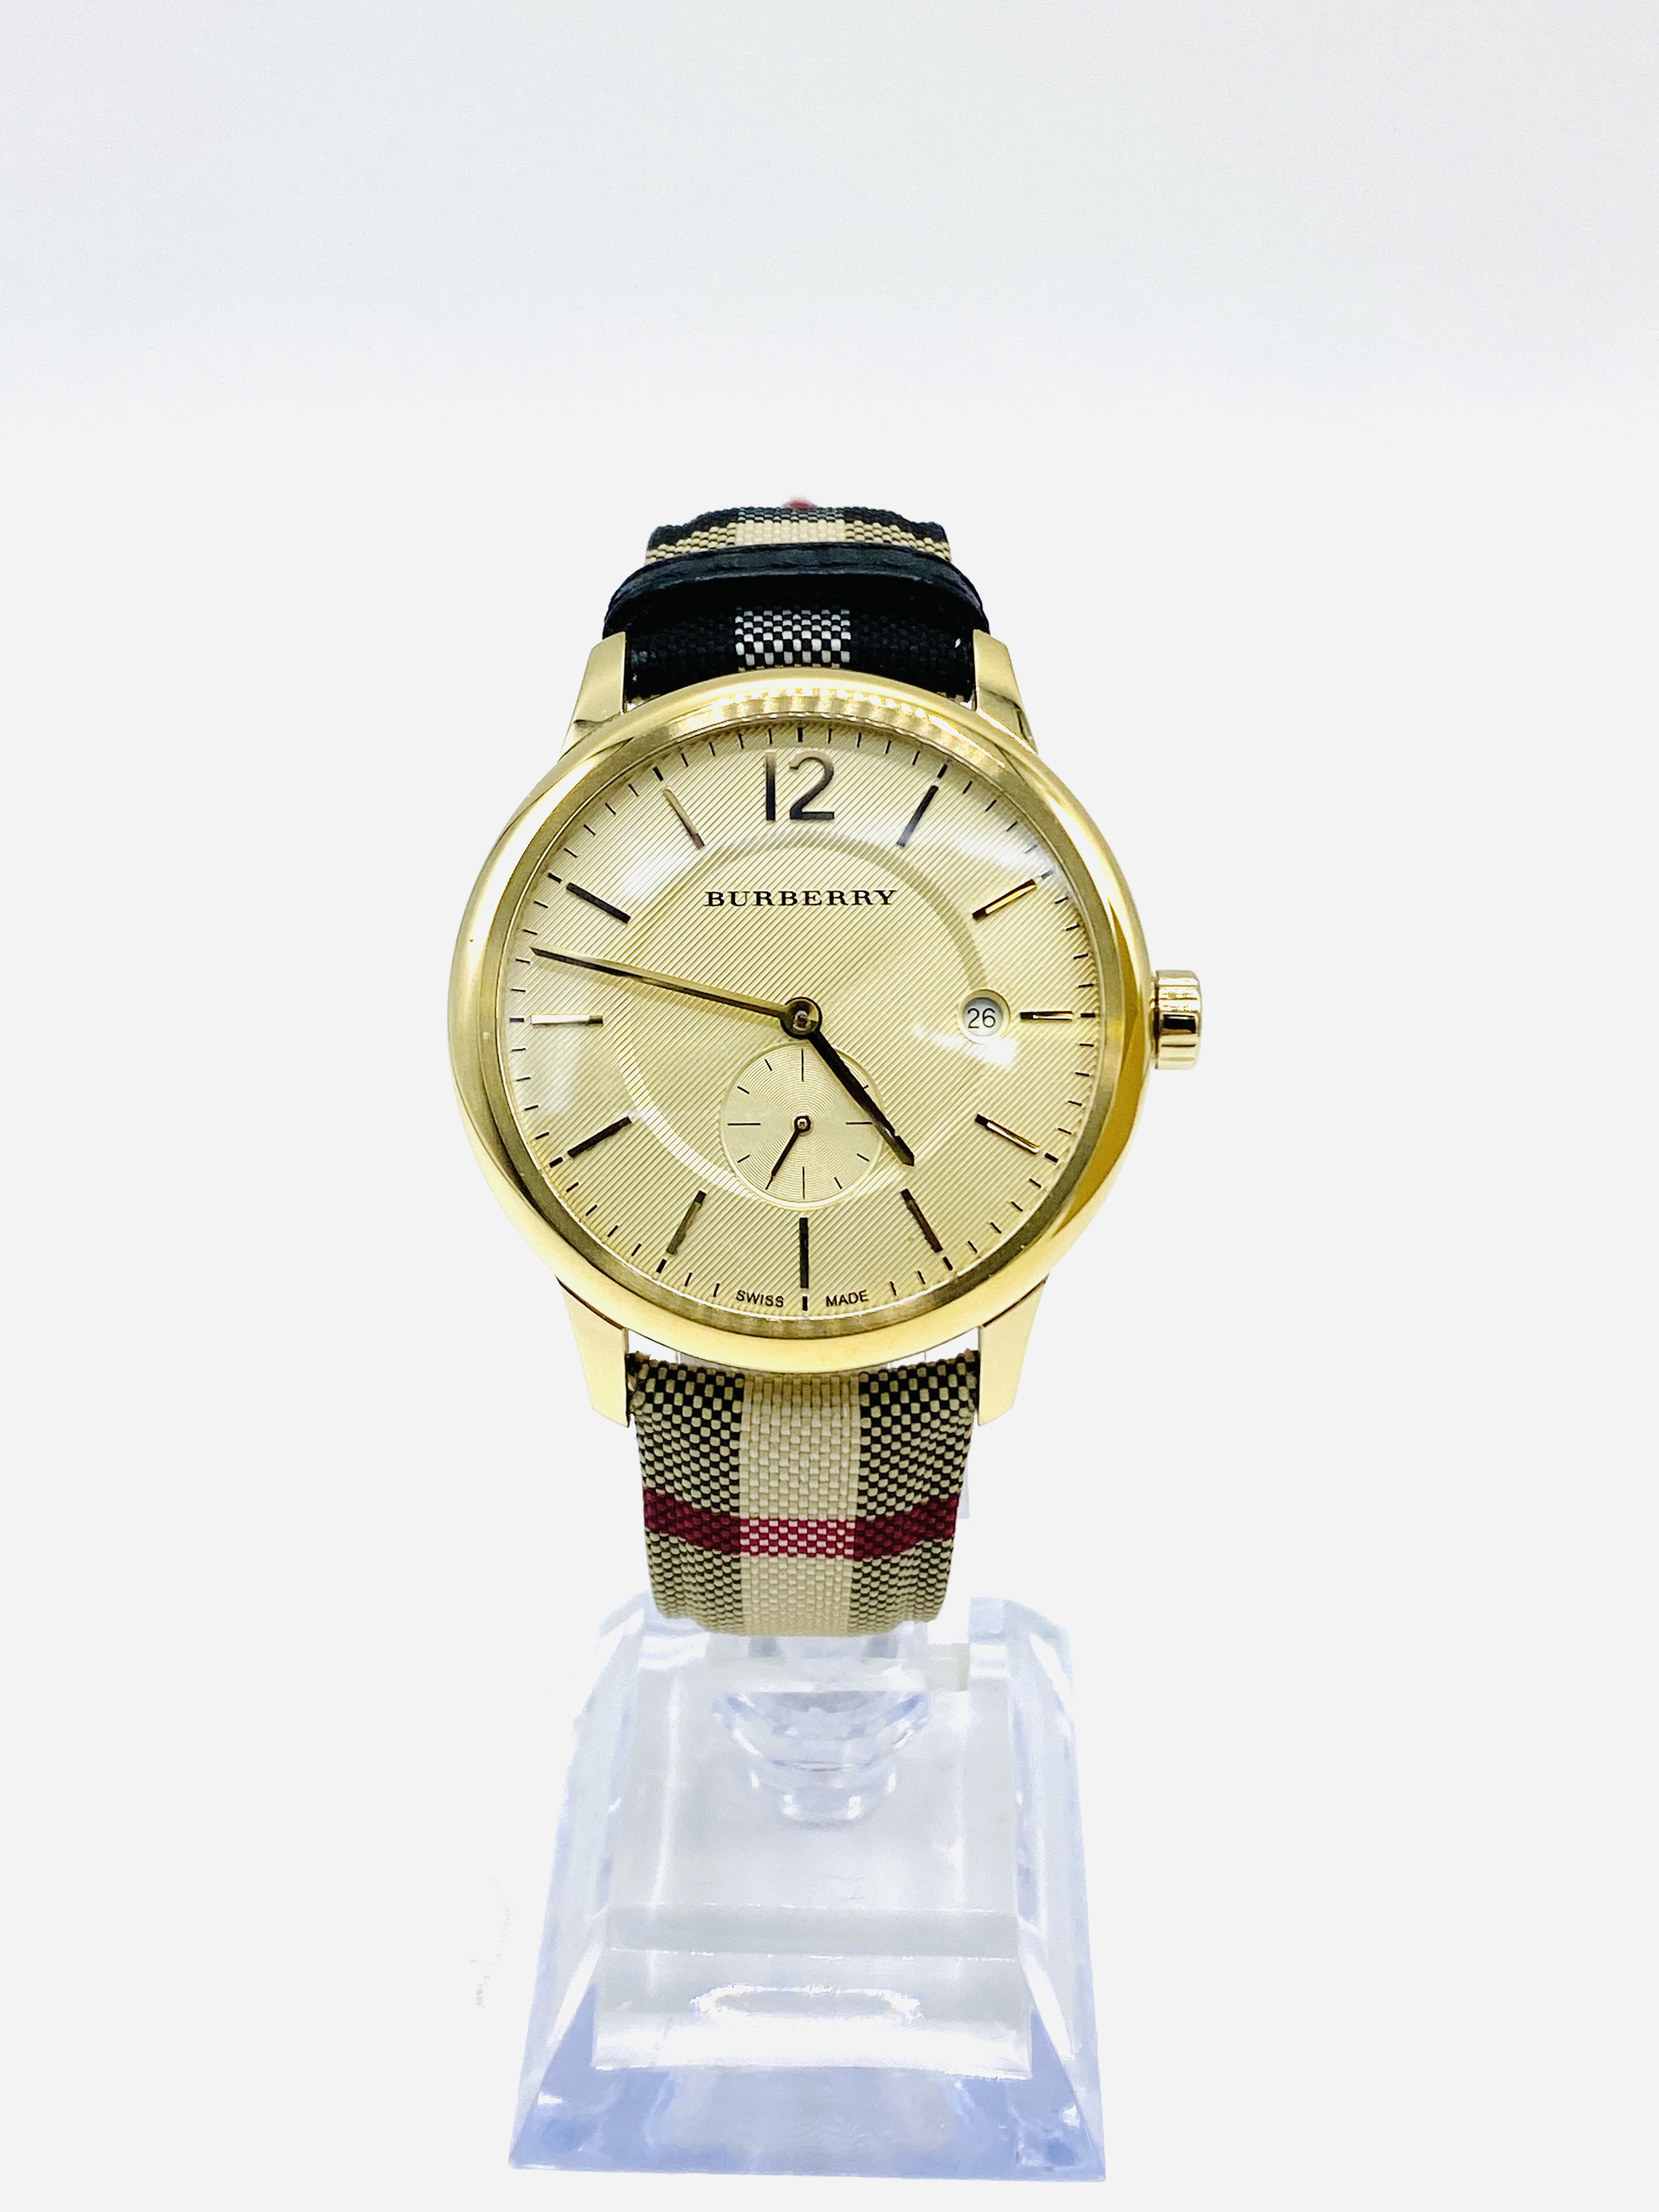 Burberry wrist watch in original box - Image 2 of 6